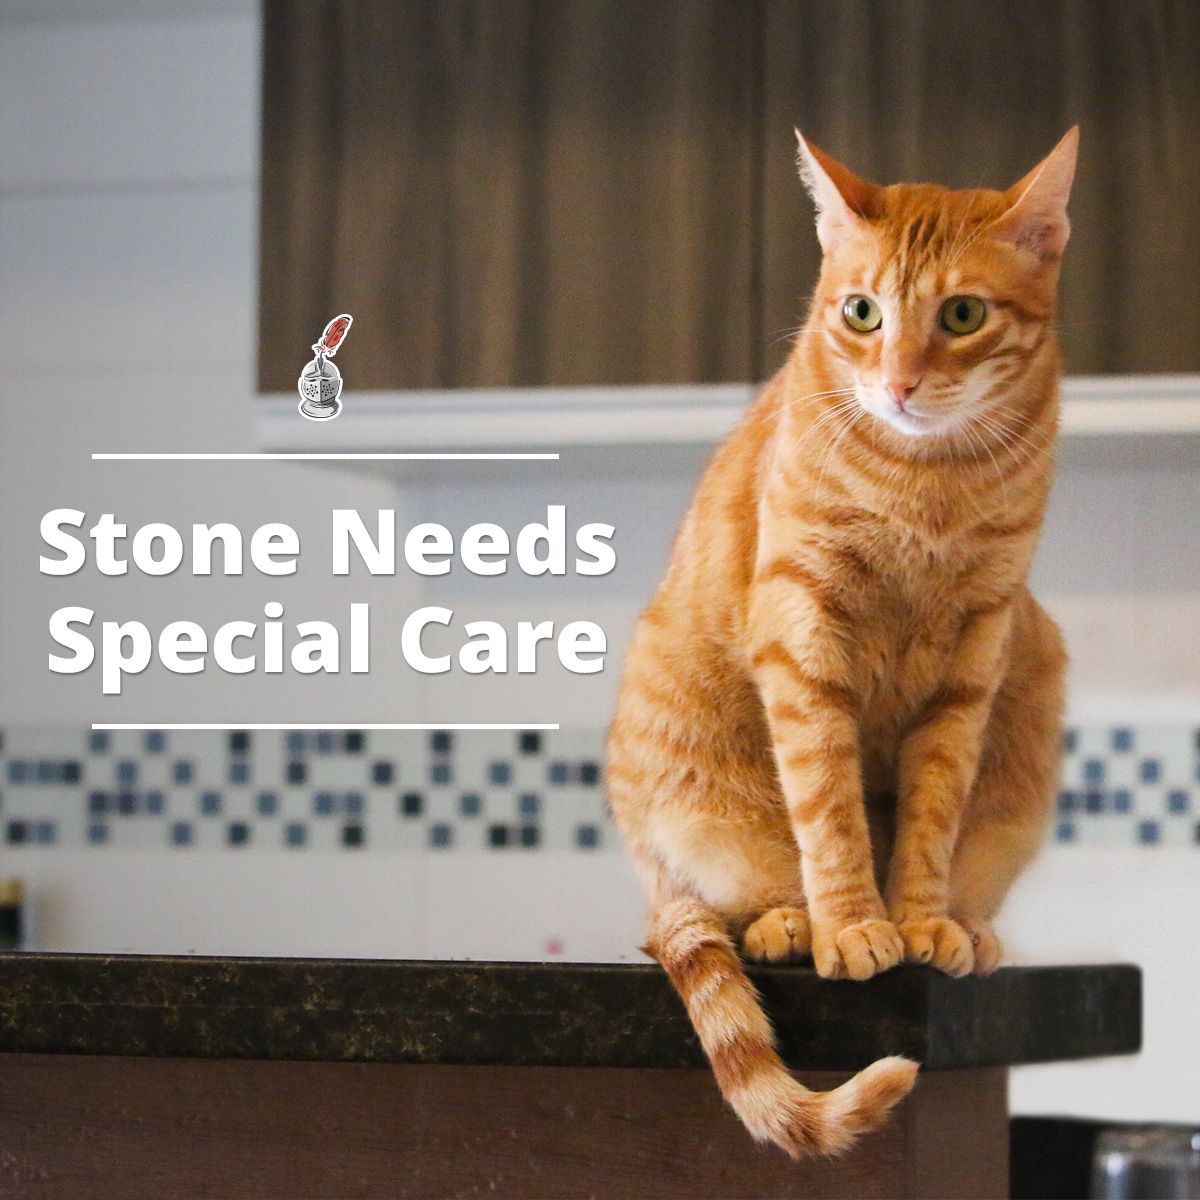 Stone Needs Special Care